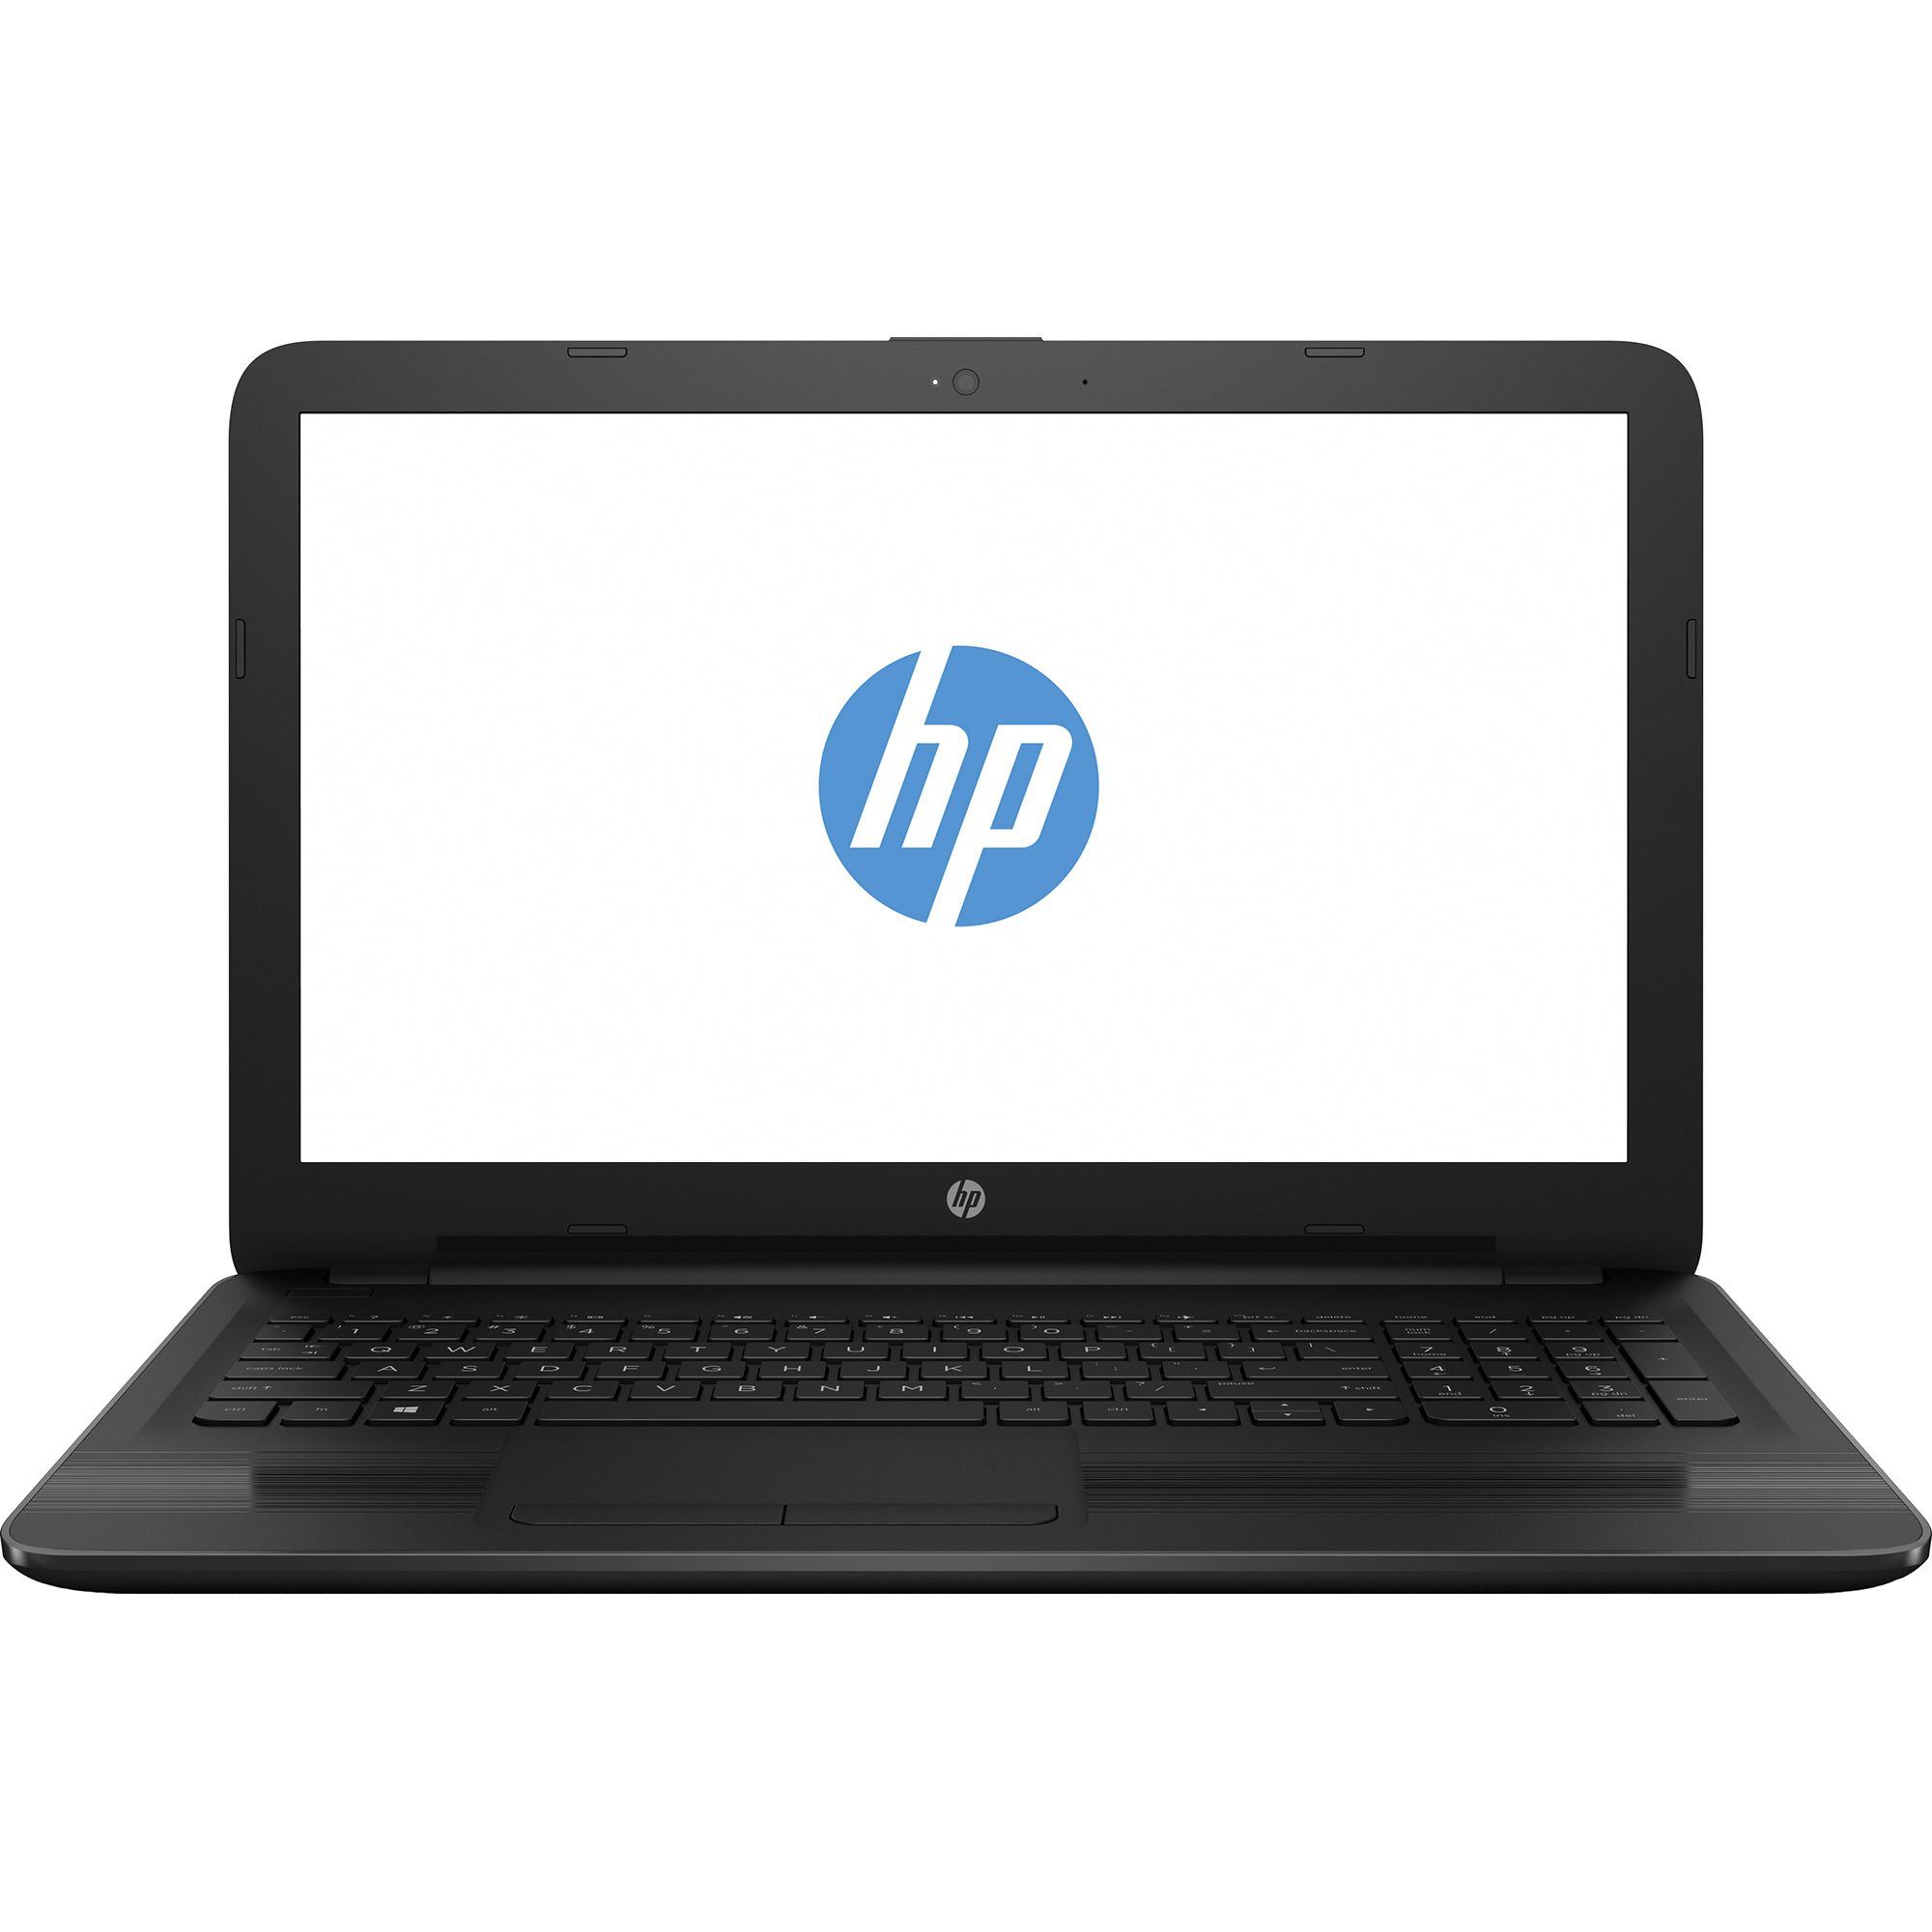  Laptop HP W8Z48EA, Intel Core i5-6200U, 4GB DDR4, HDD 500GB, AMD Radeon R7 M440 2GB, Free DOS 